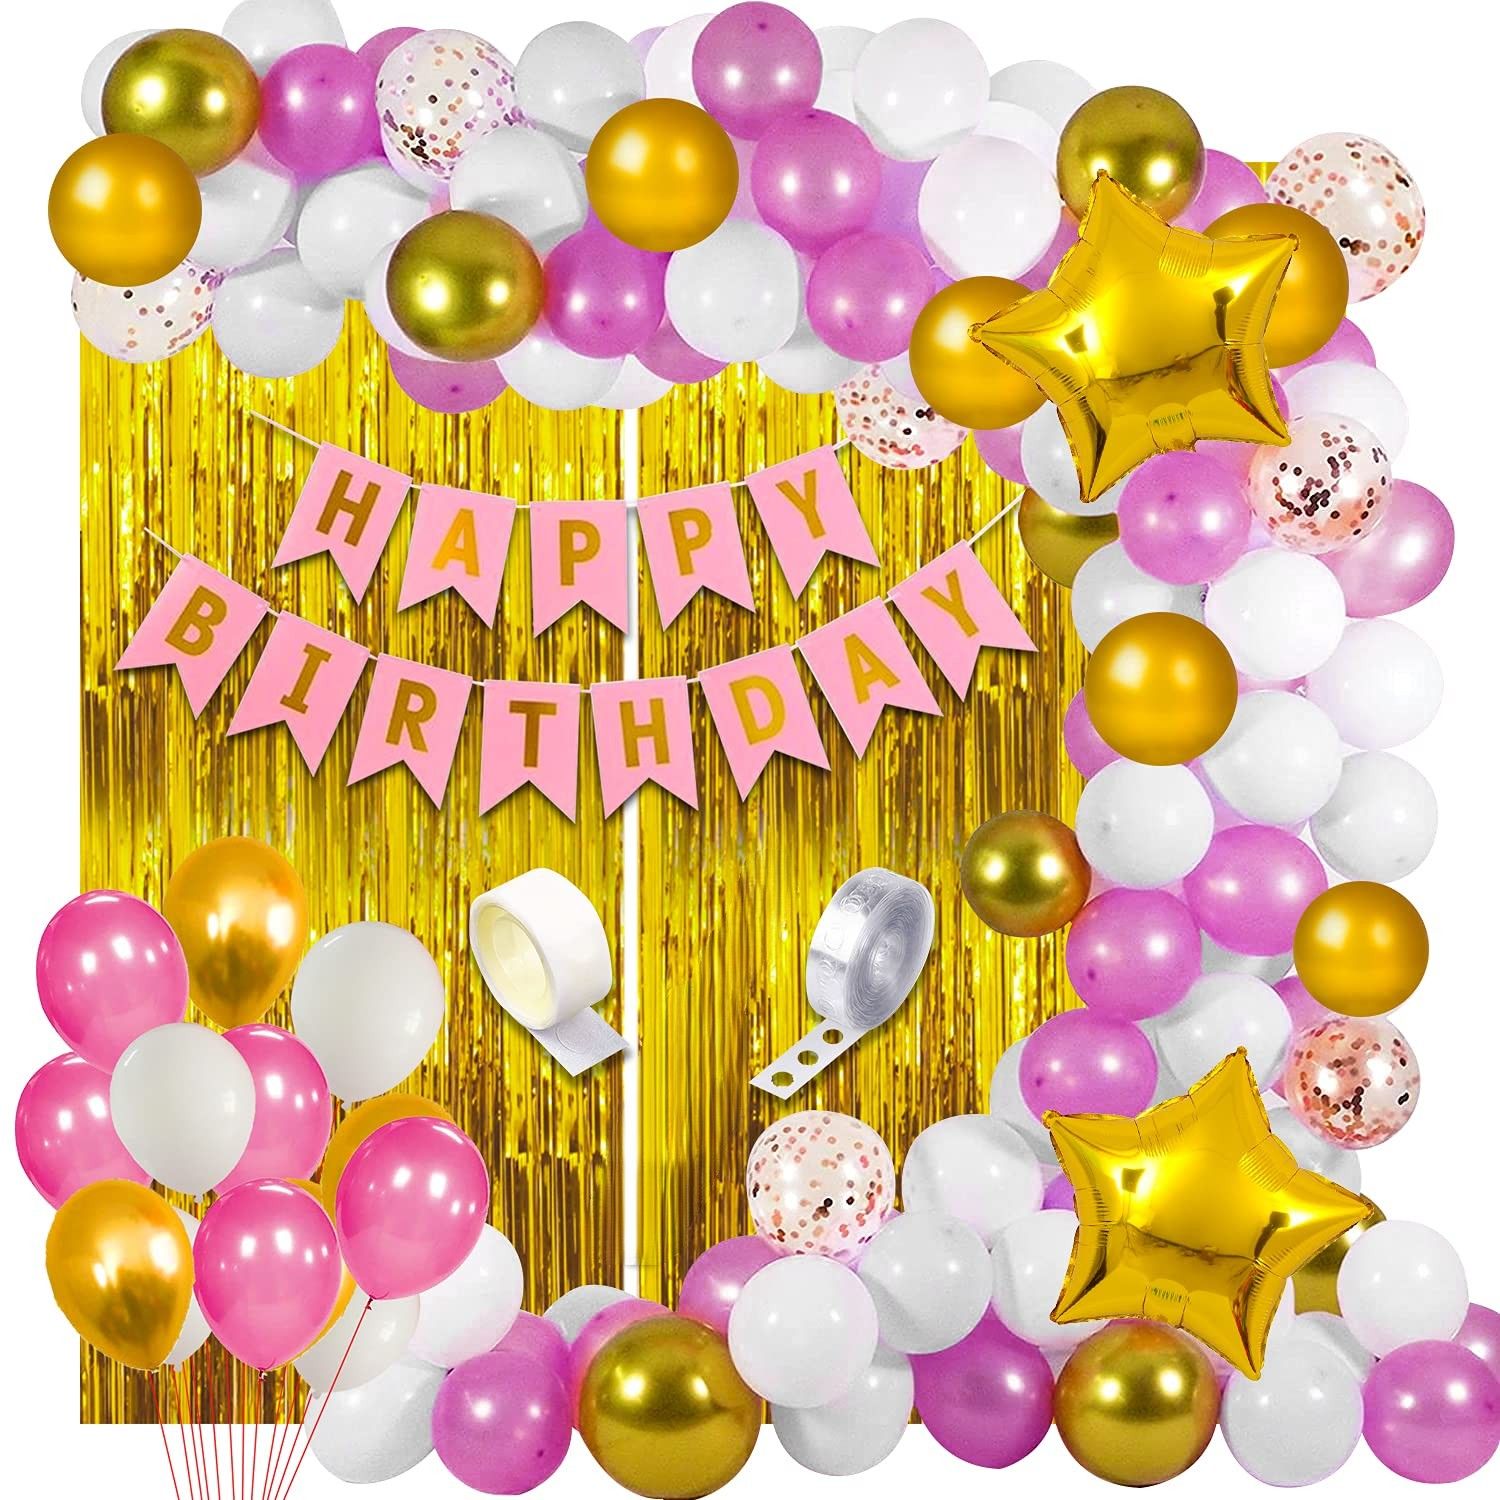 Pack of 62pcs Birthday Decoration kit - 1 3 pcs Set of Happy